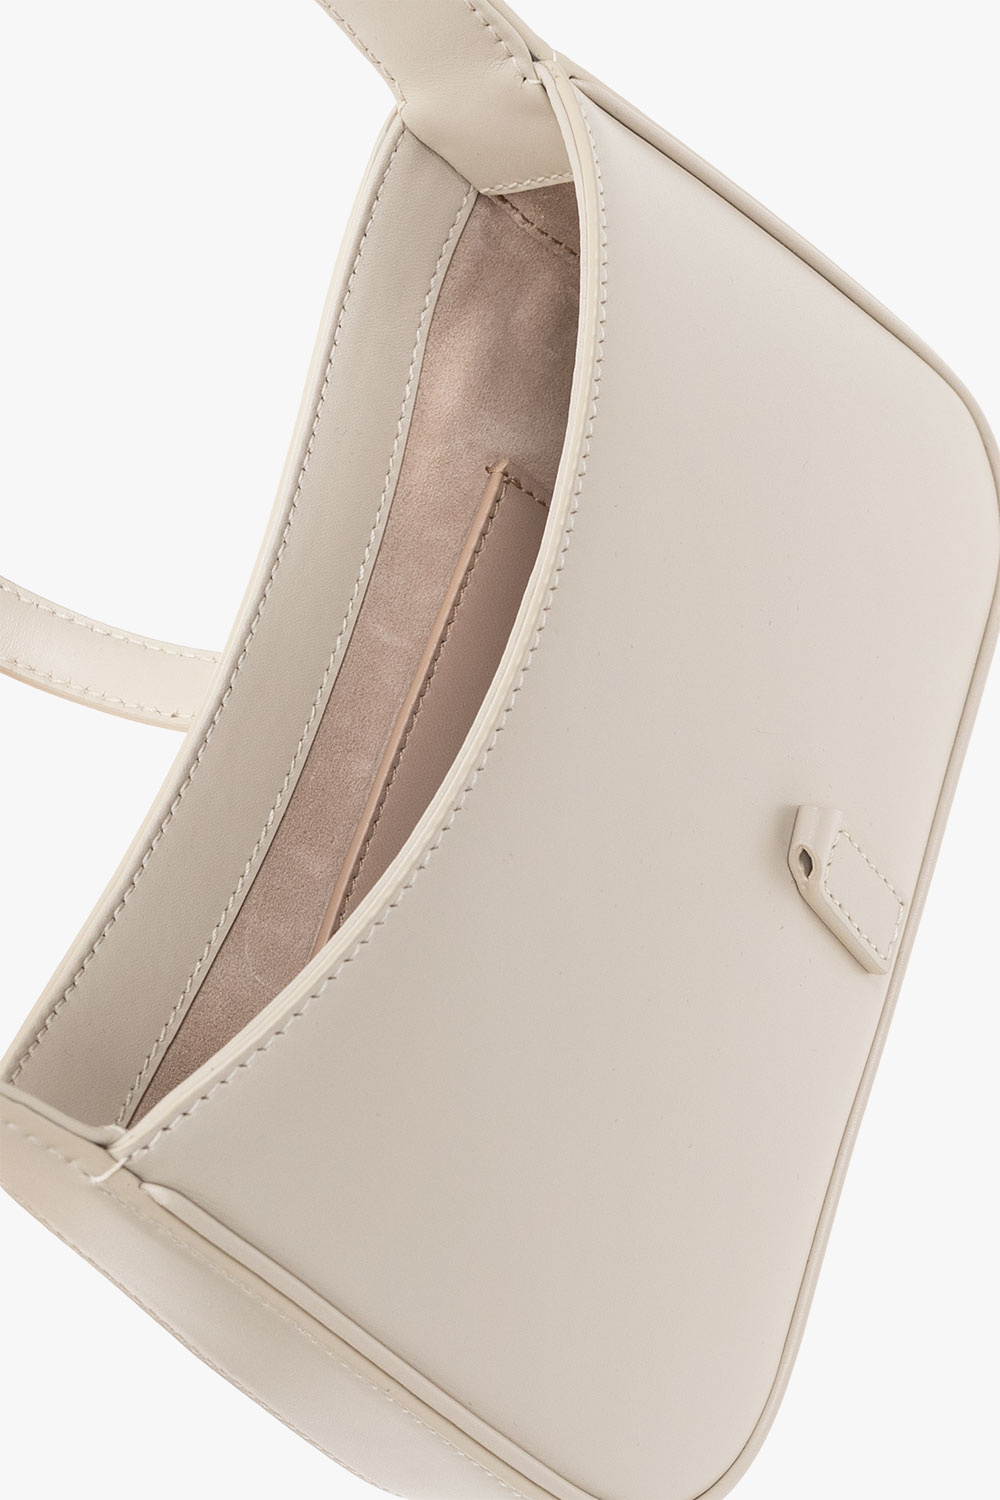 Cream 'Le 5 A 7 Mini' hobo handbag Saint Laurent - Vitkac TW